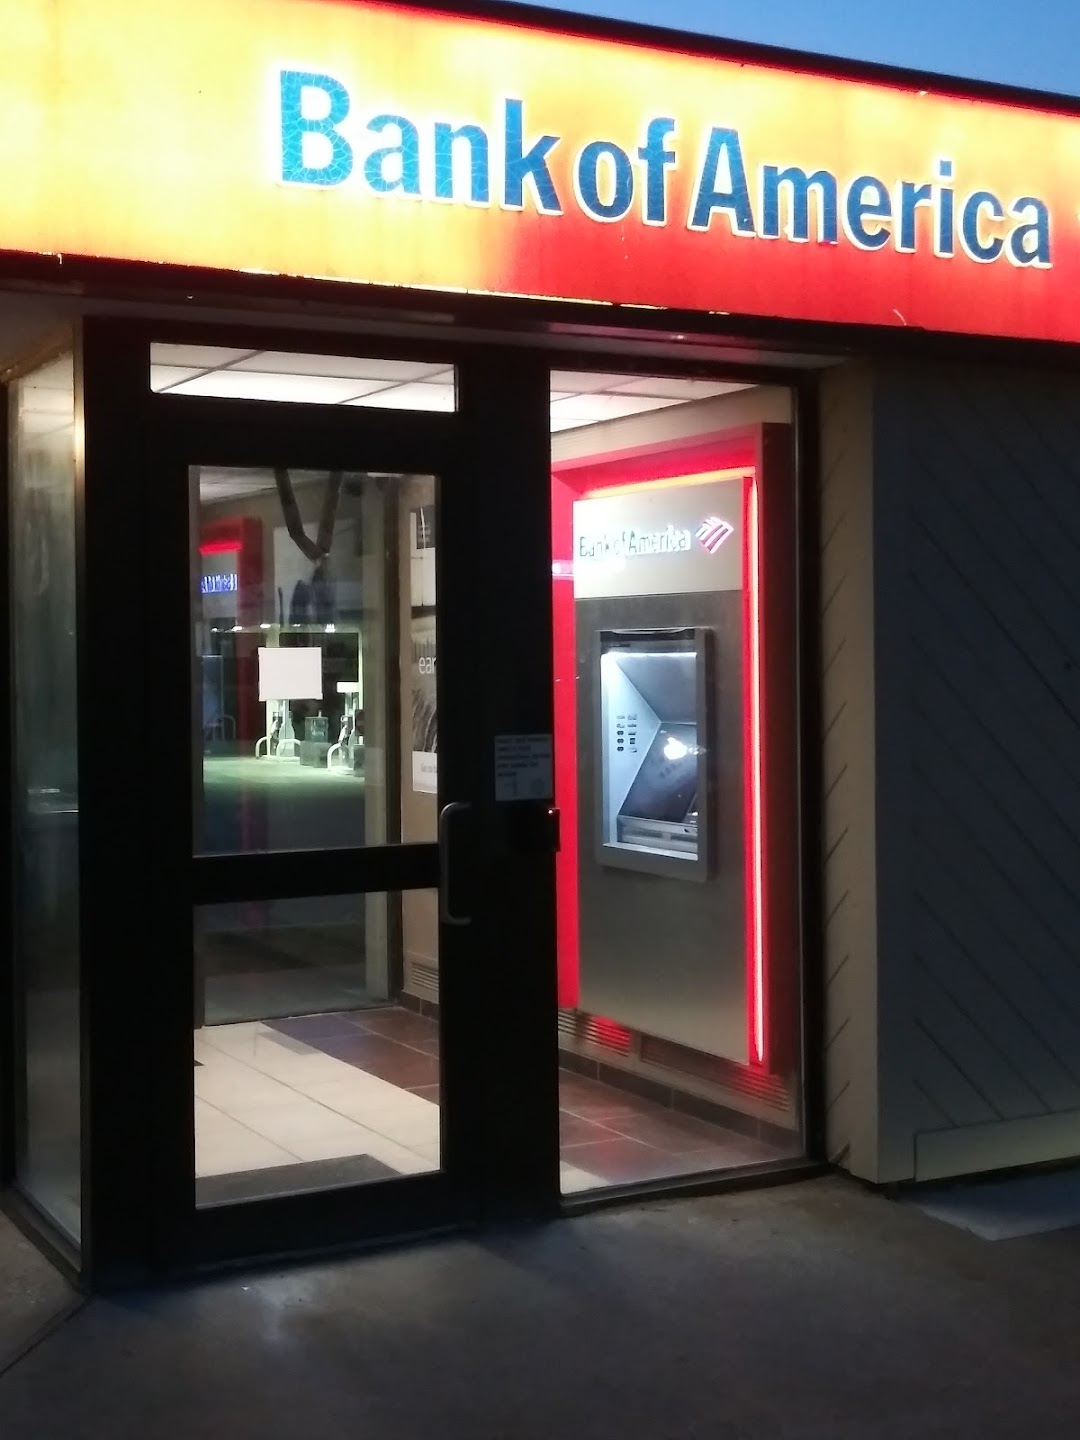 Bank of America ATM